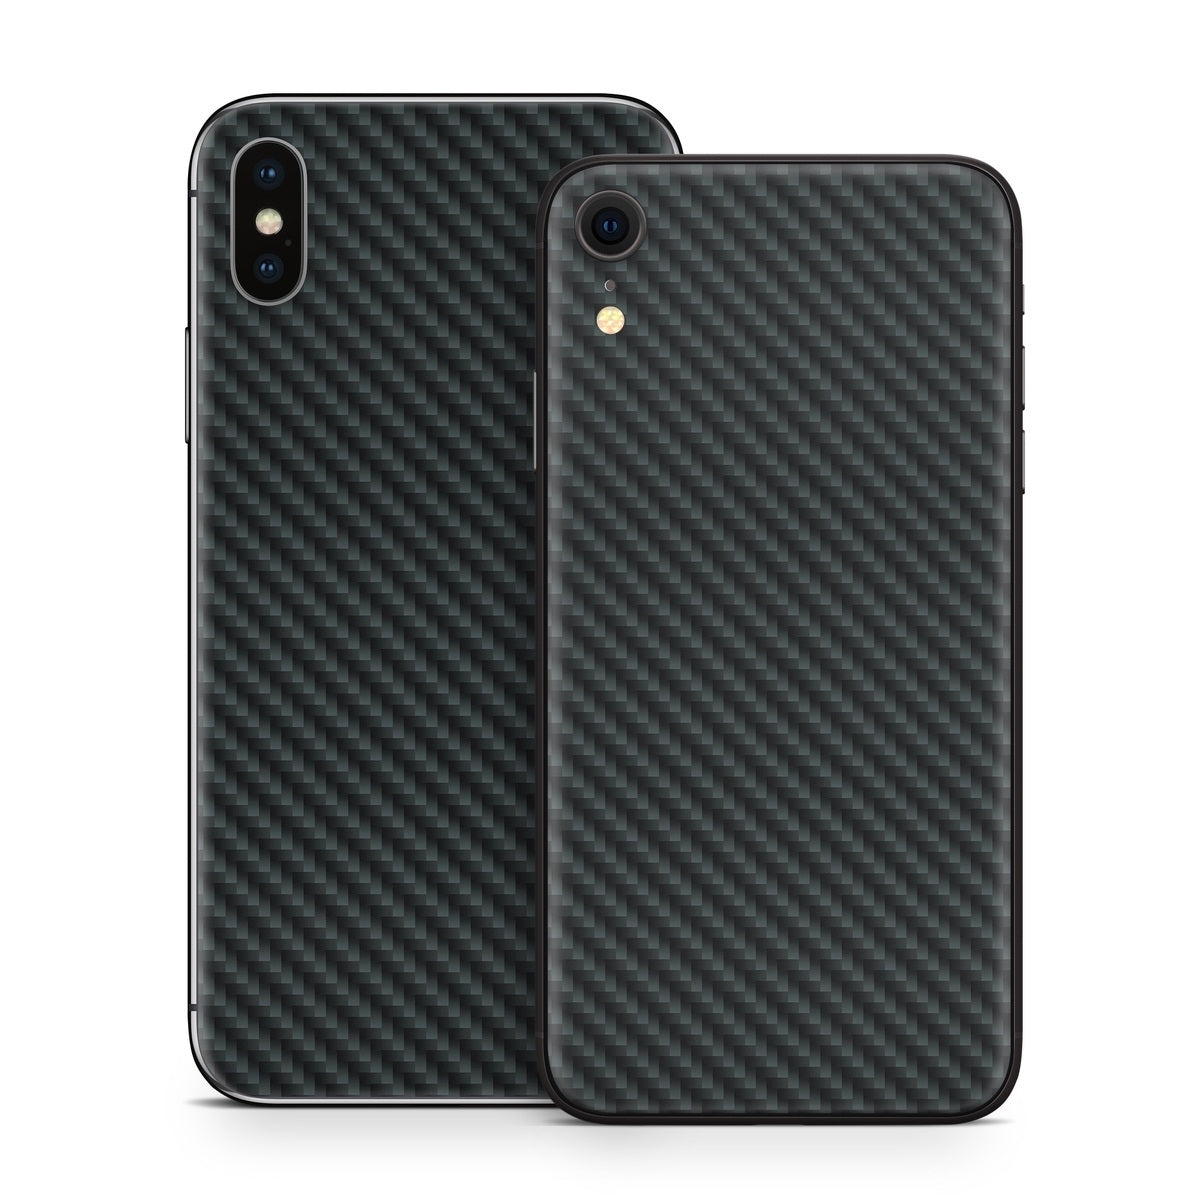 Carbon - Apple iPhone X Skin